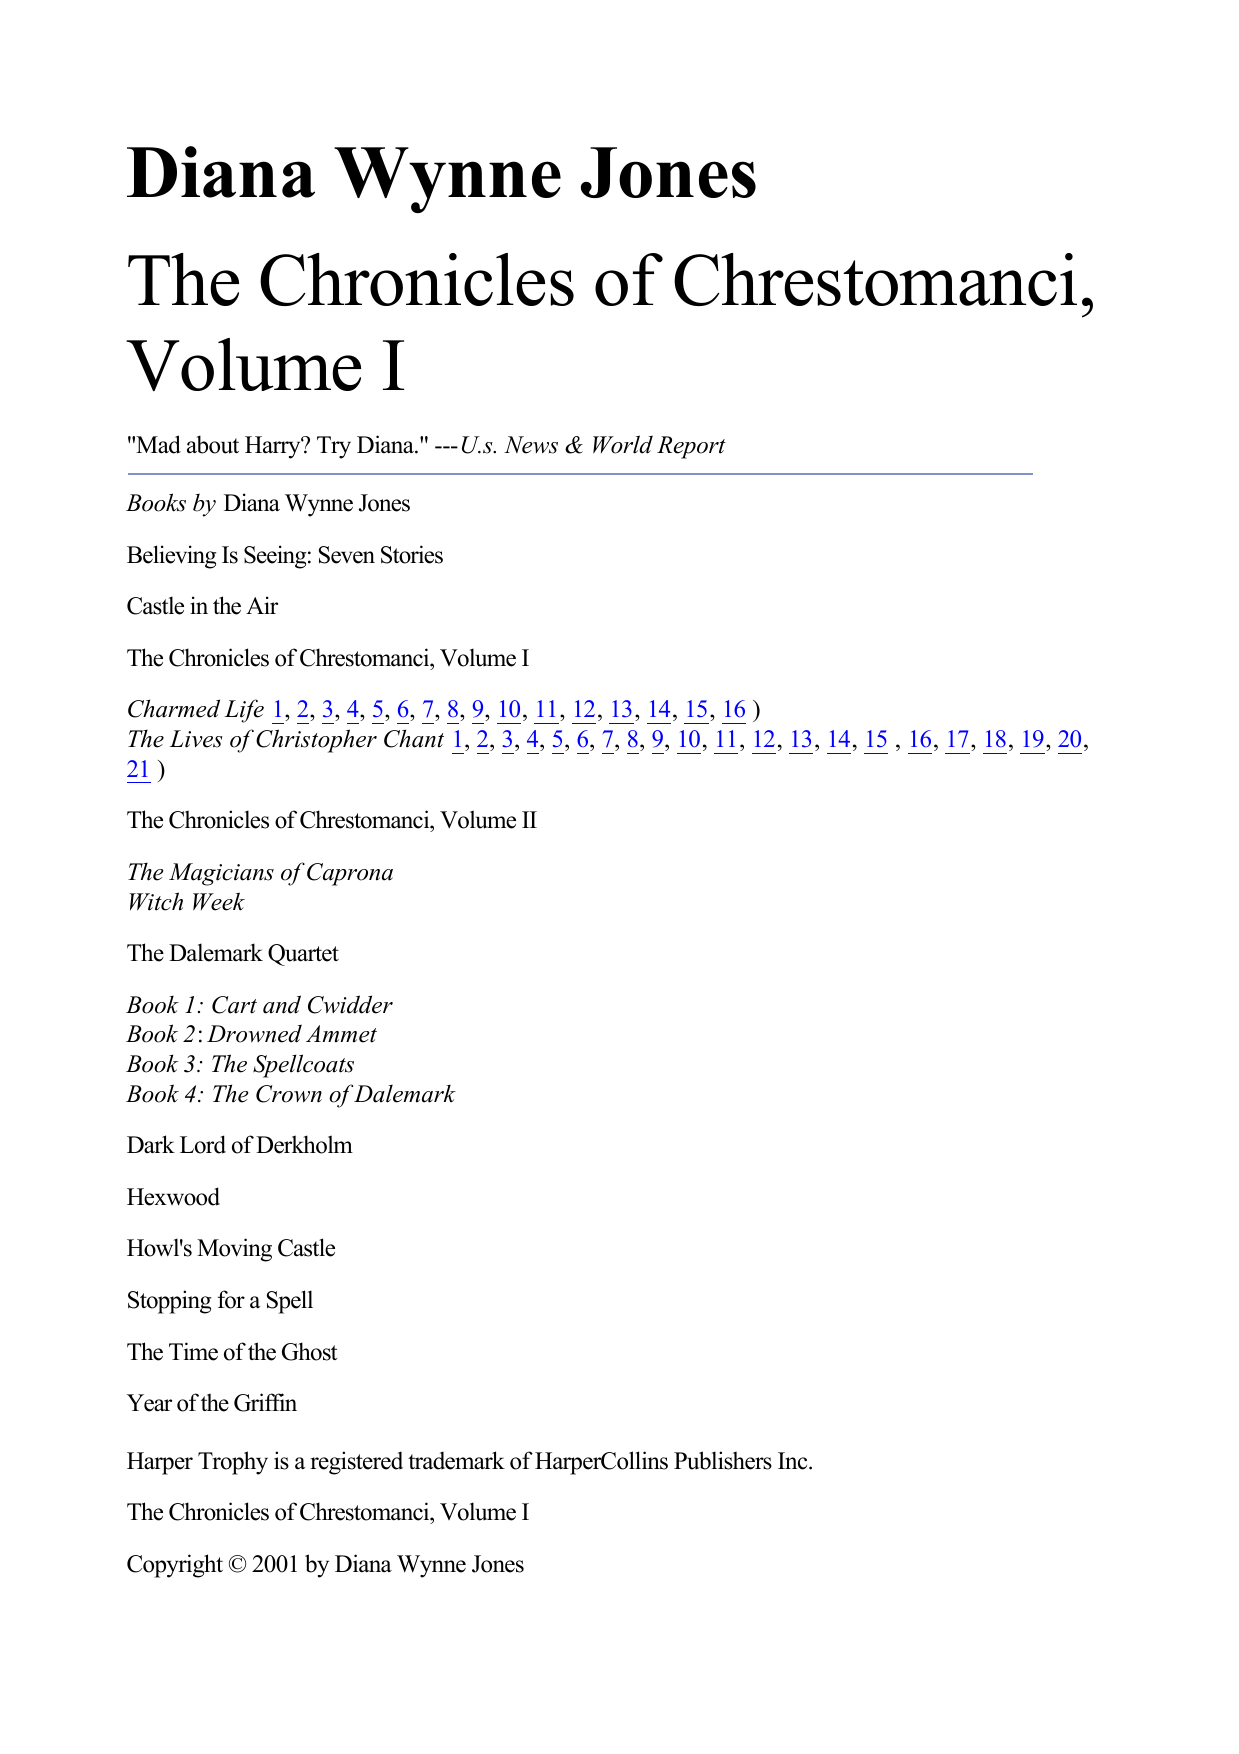 The Chronicles of Chrestomanci, Volume 1